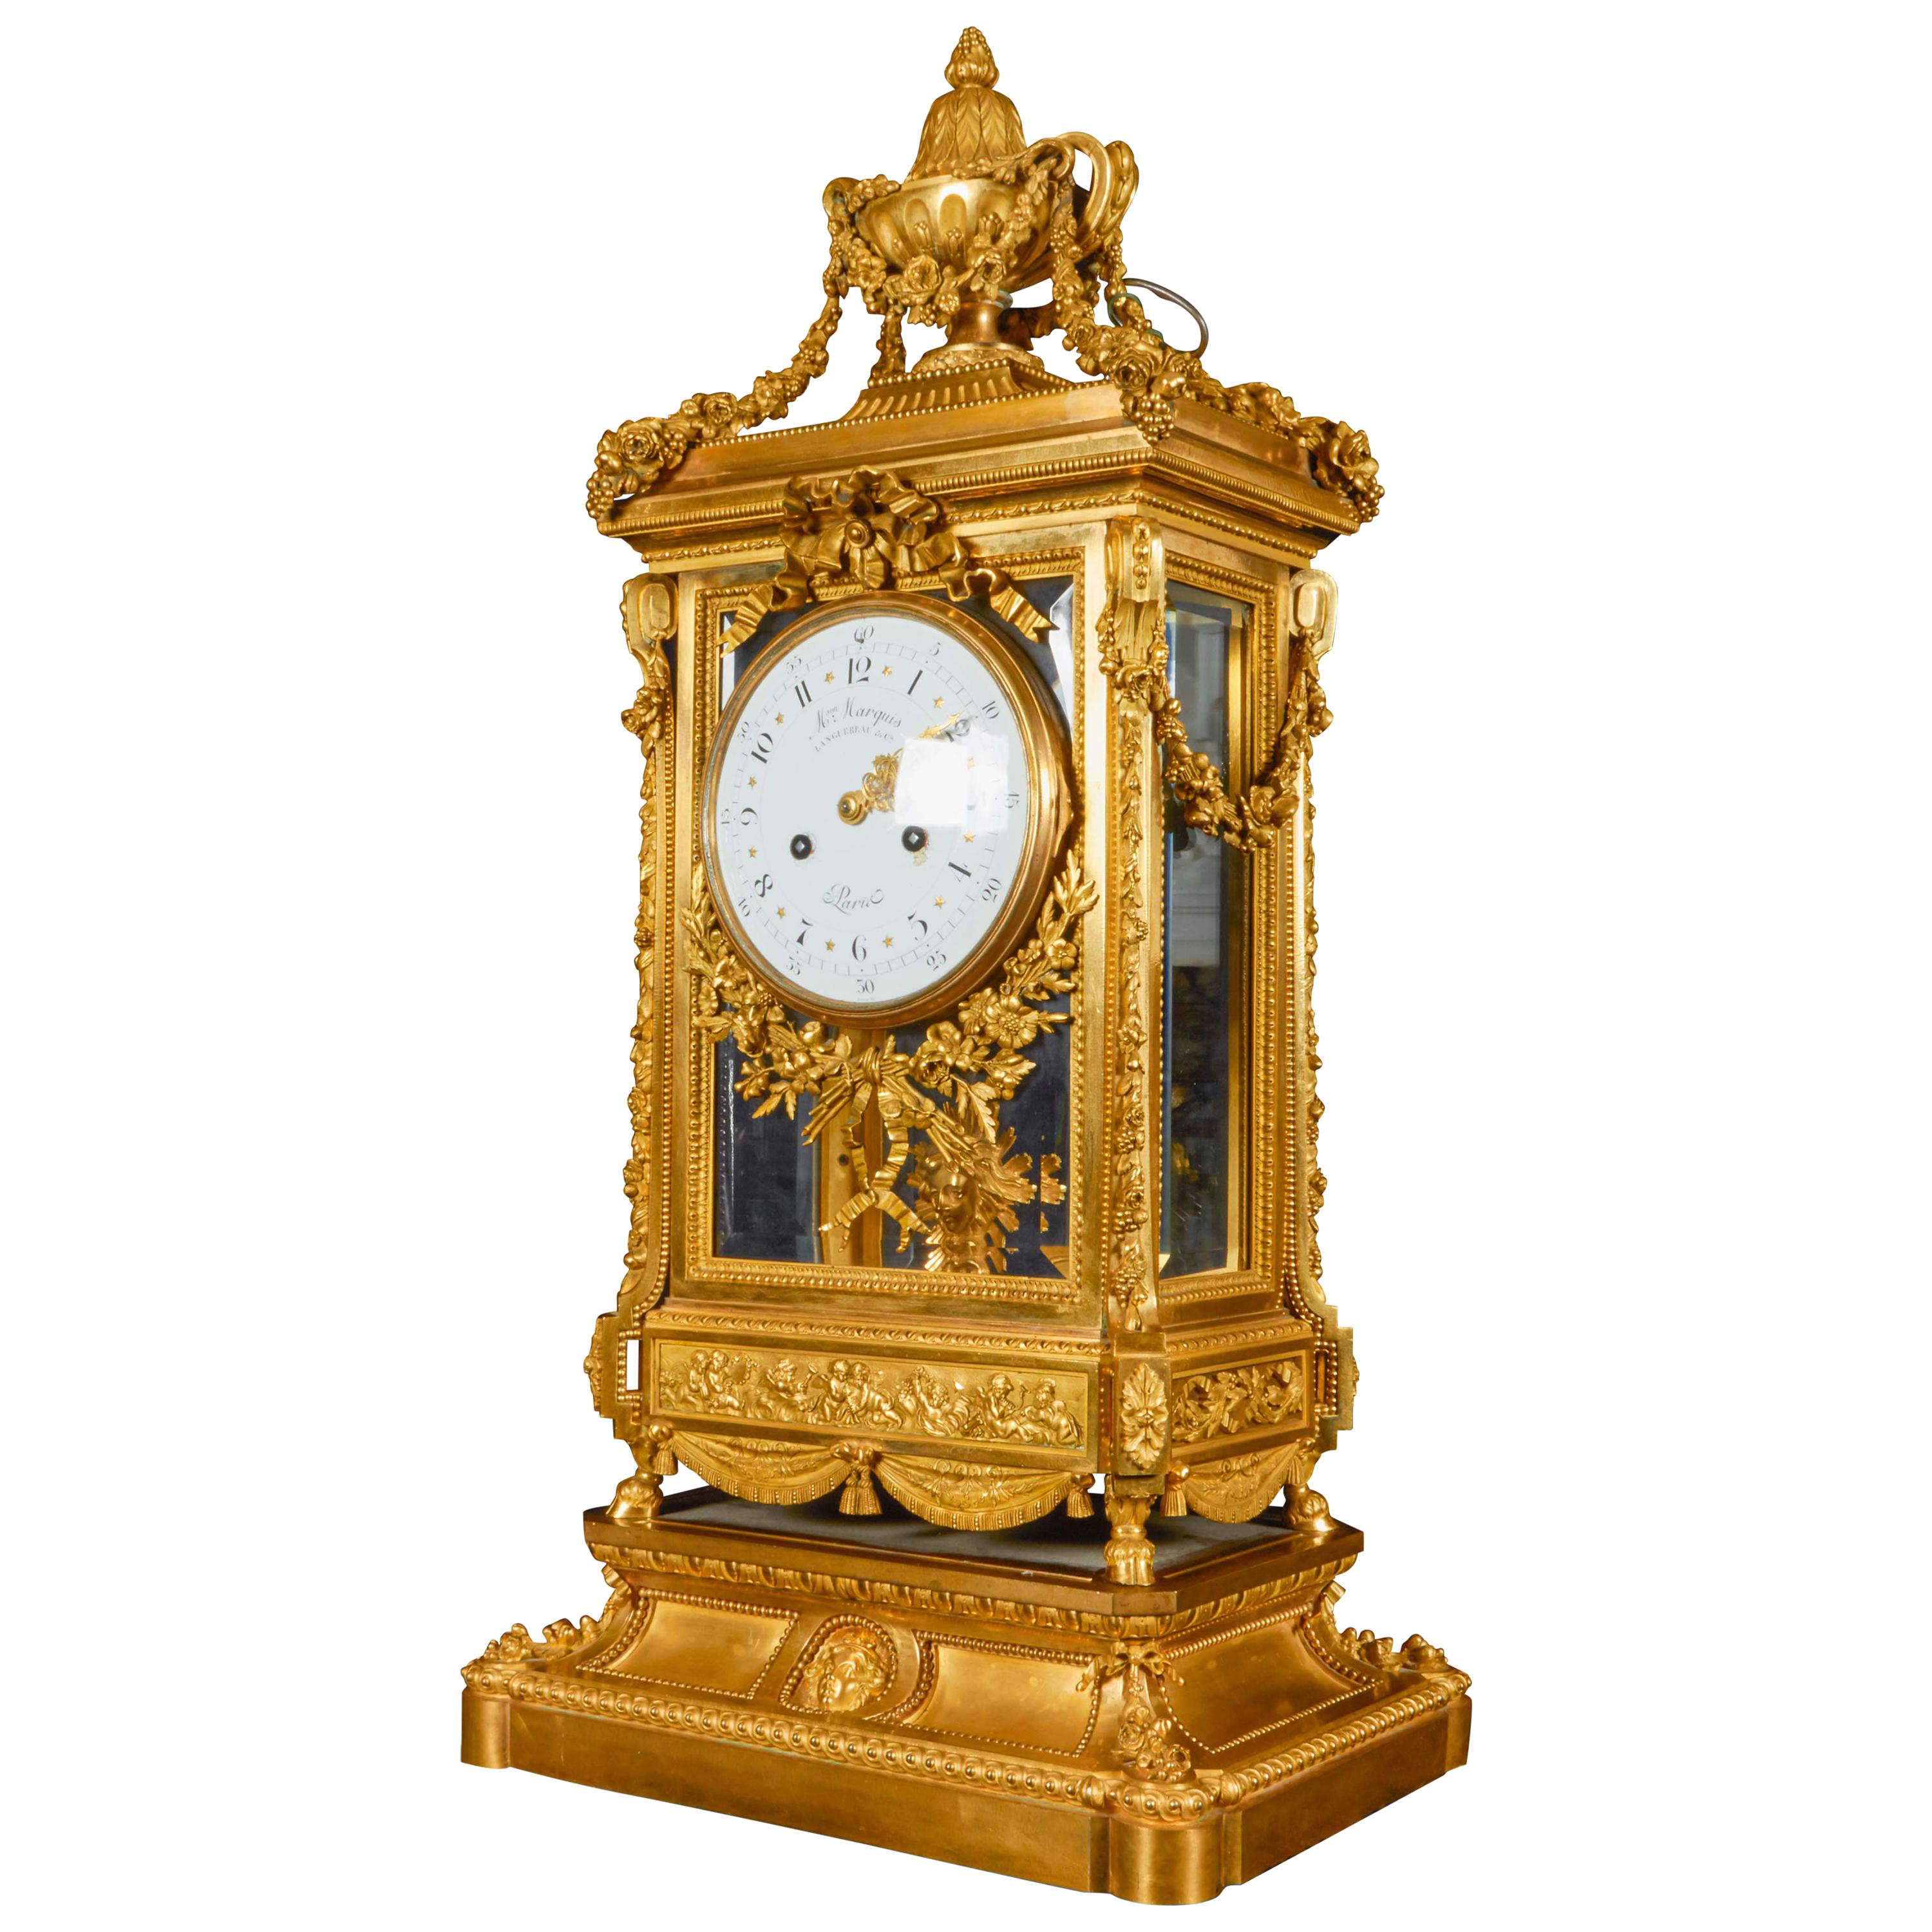 Monumental Antique French Louis XVI Style Ormolu Mantel Clock by Maison Marquis